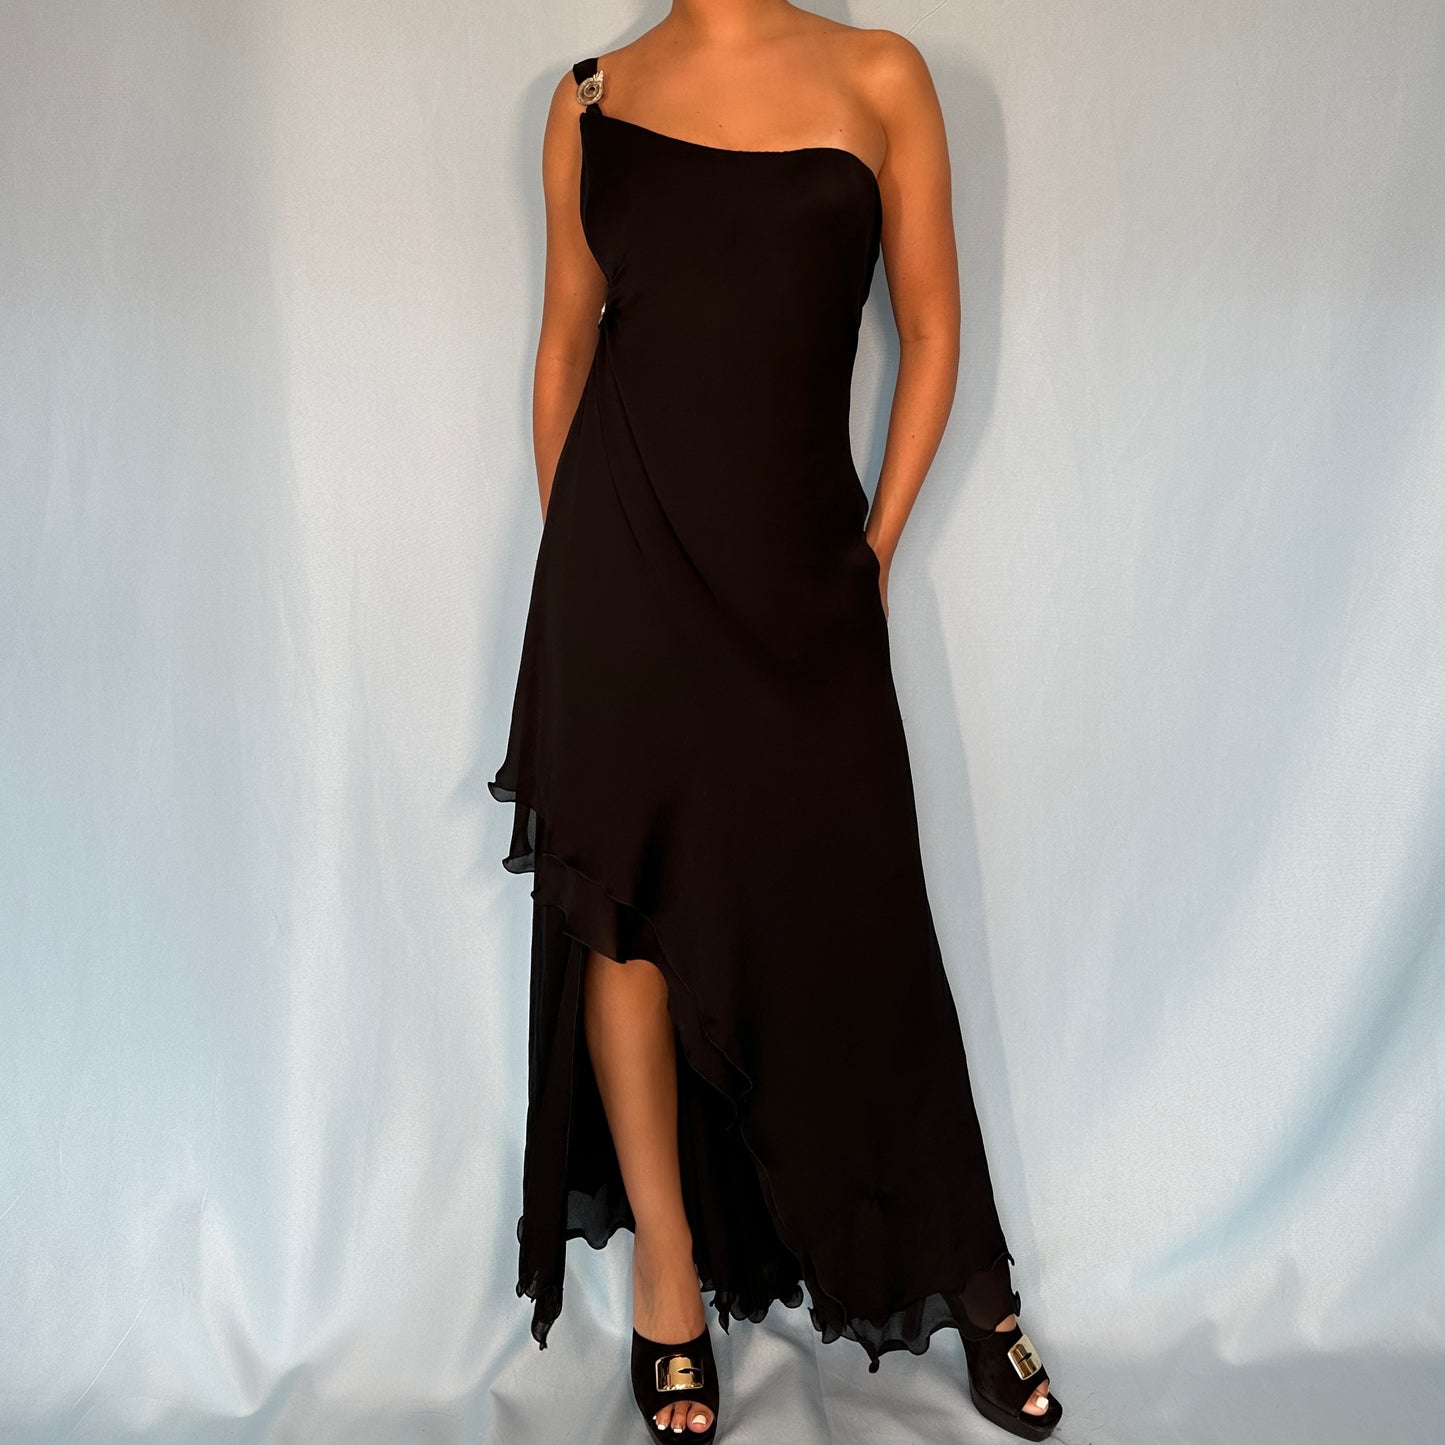 Versace Spring 1995 One Shoulder Black Silk Gown Dress